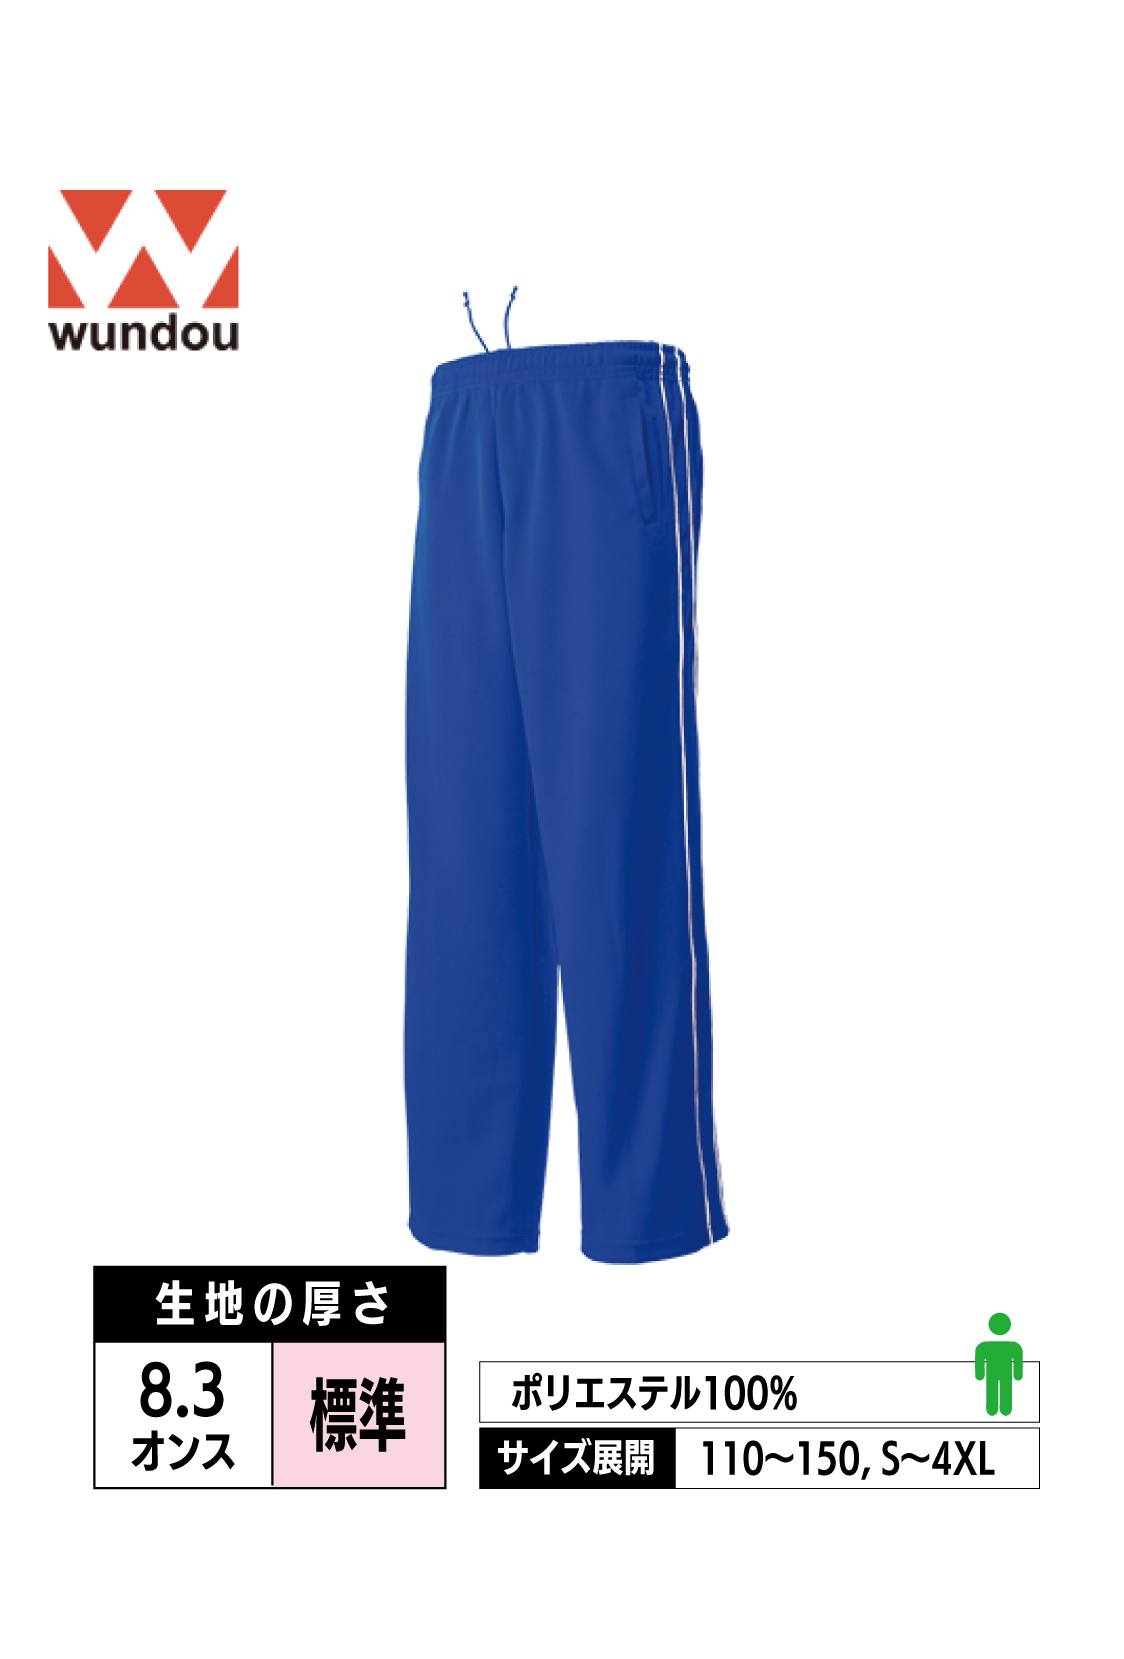 P2050｜パイピングトレーニングパンツ【全8色】wundou